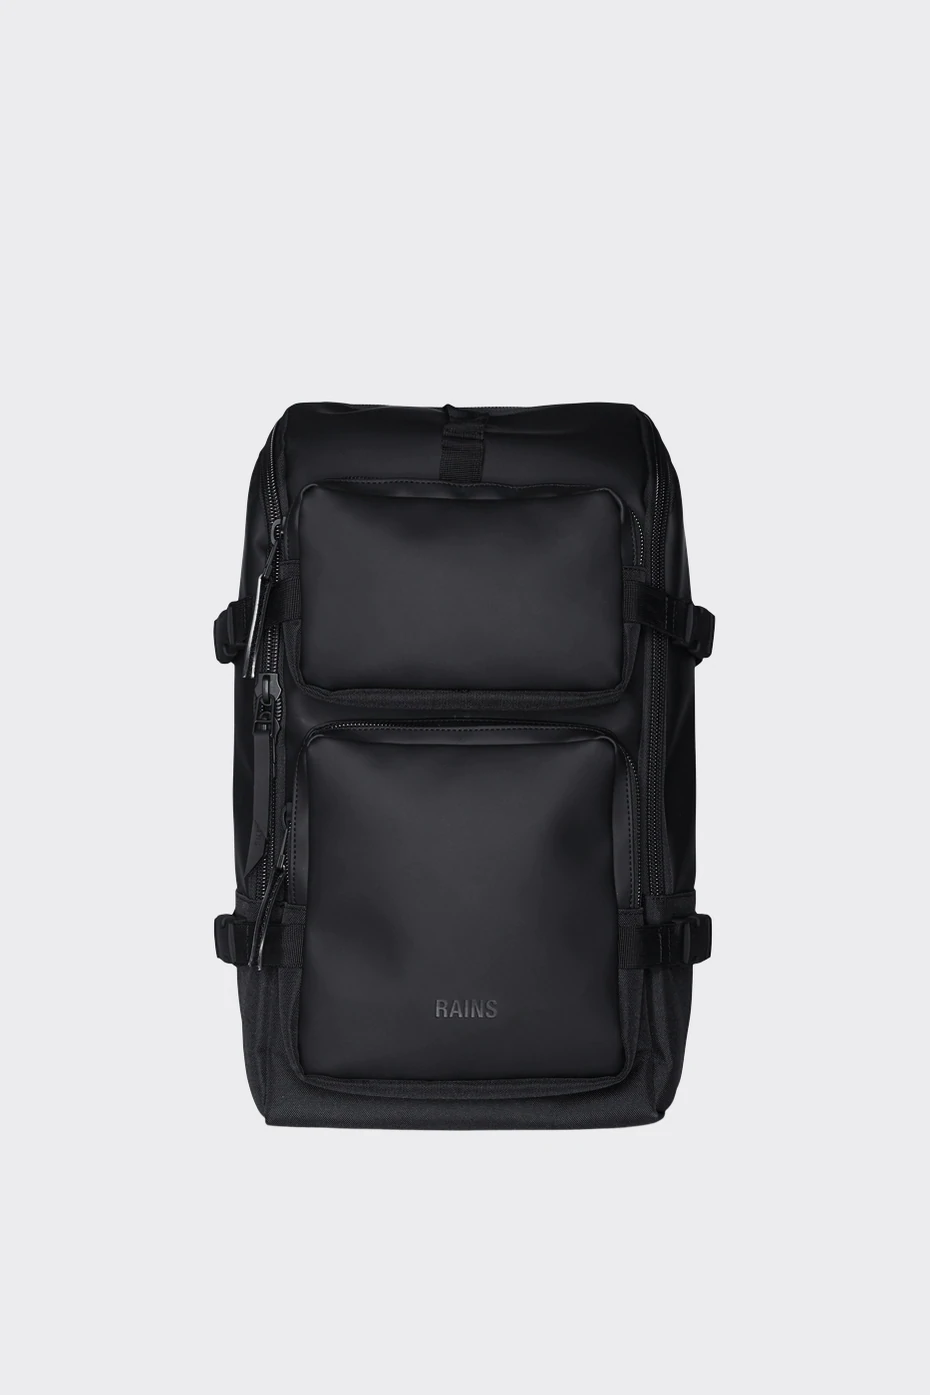 Lyle & Scott Unisex 2021 Branded Lightweight Adjustable Backpack Rucksack 